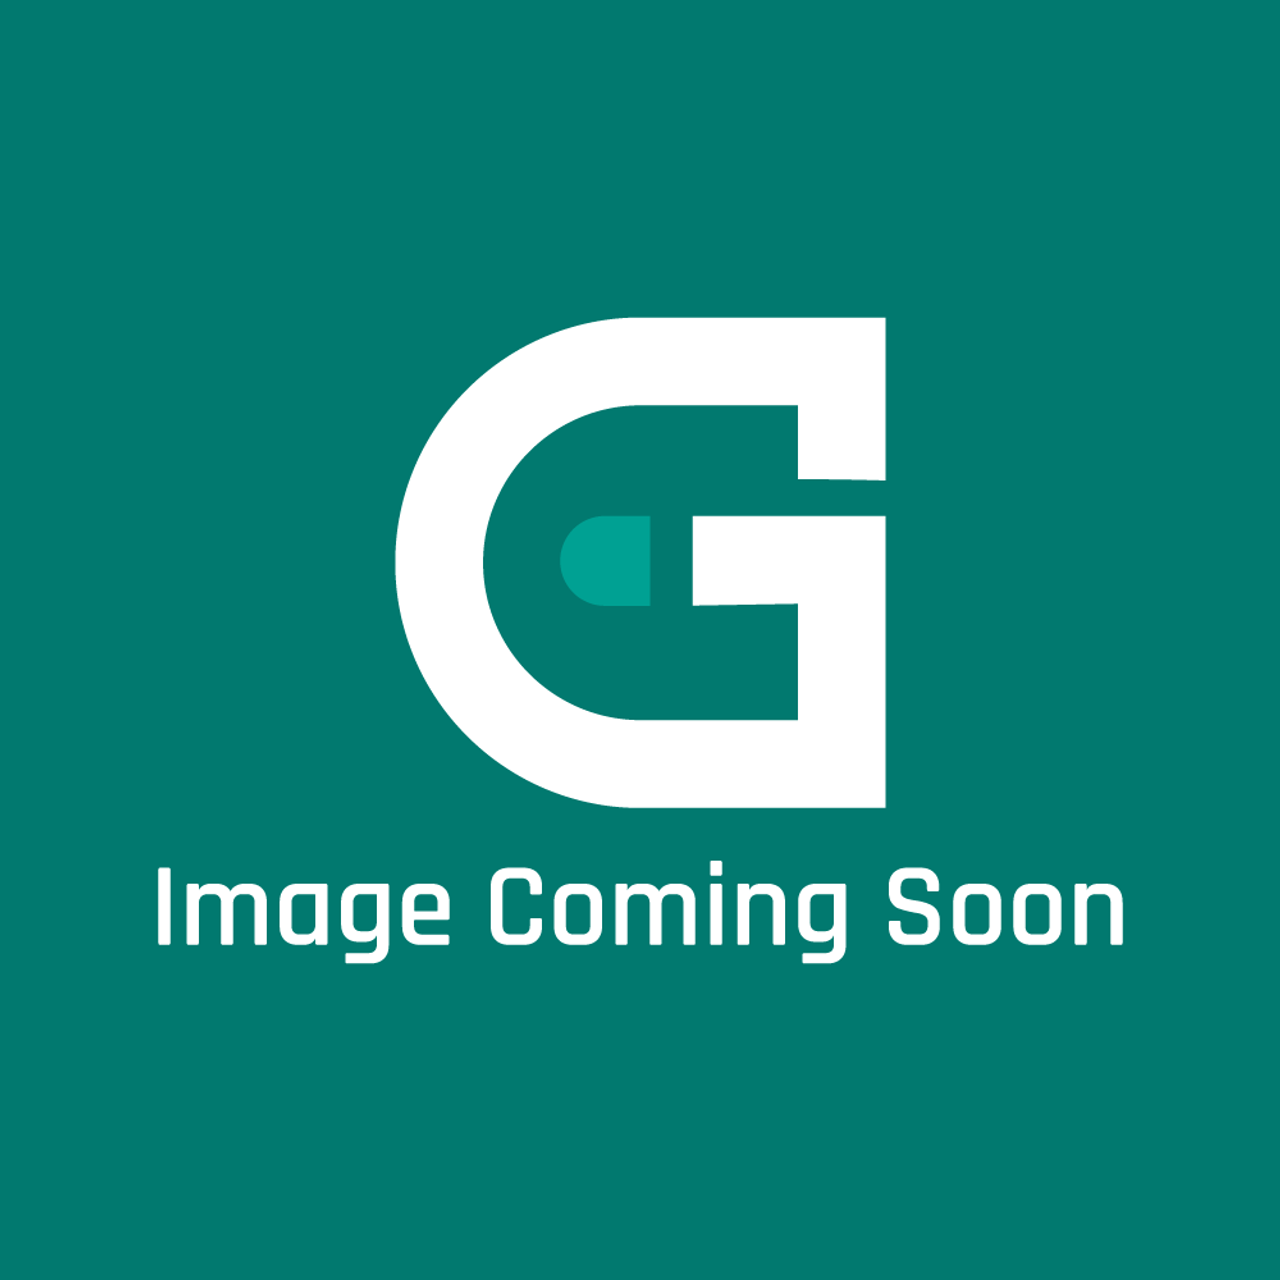 GE Appliances WB18X31501 - Harness Burner Box - Image Coming Soon!